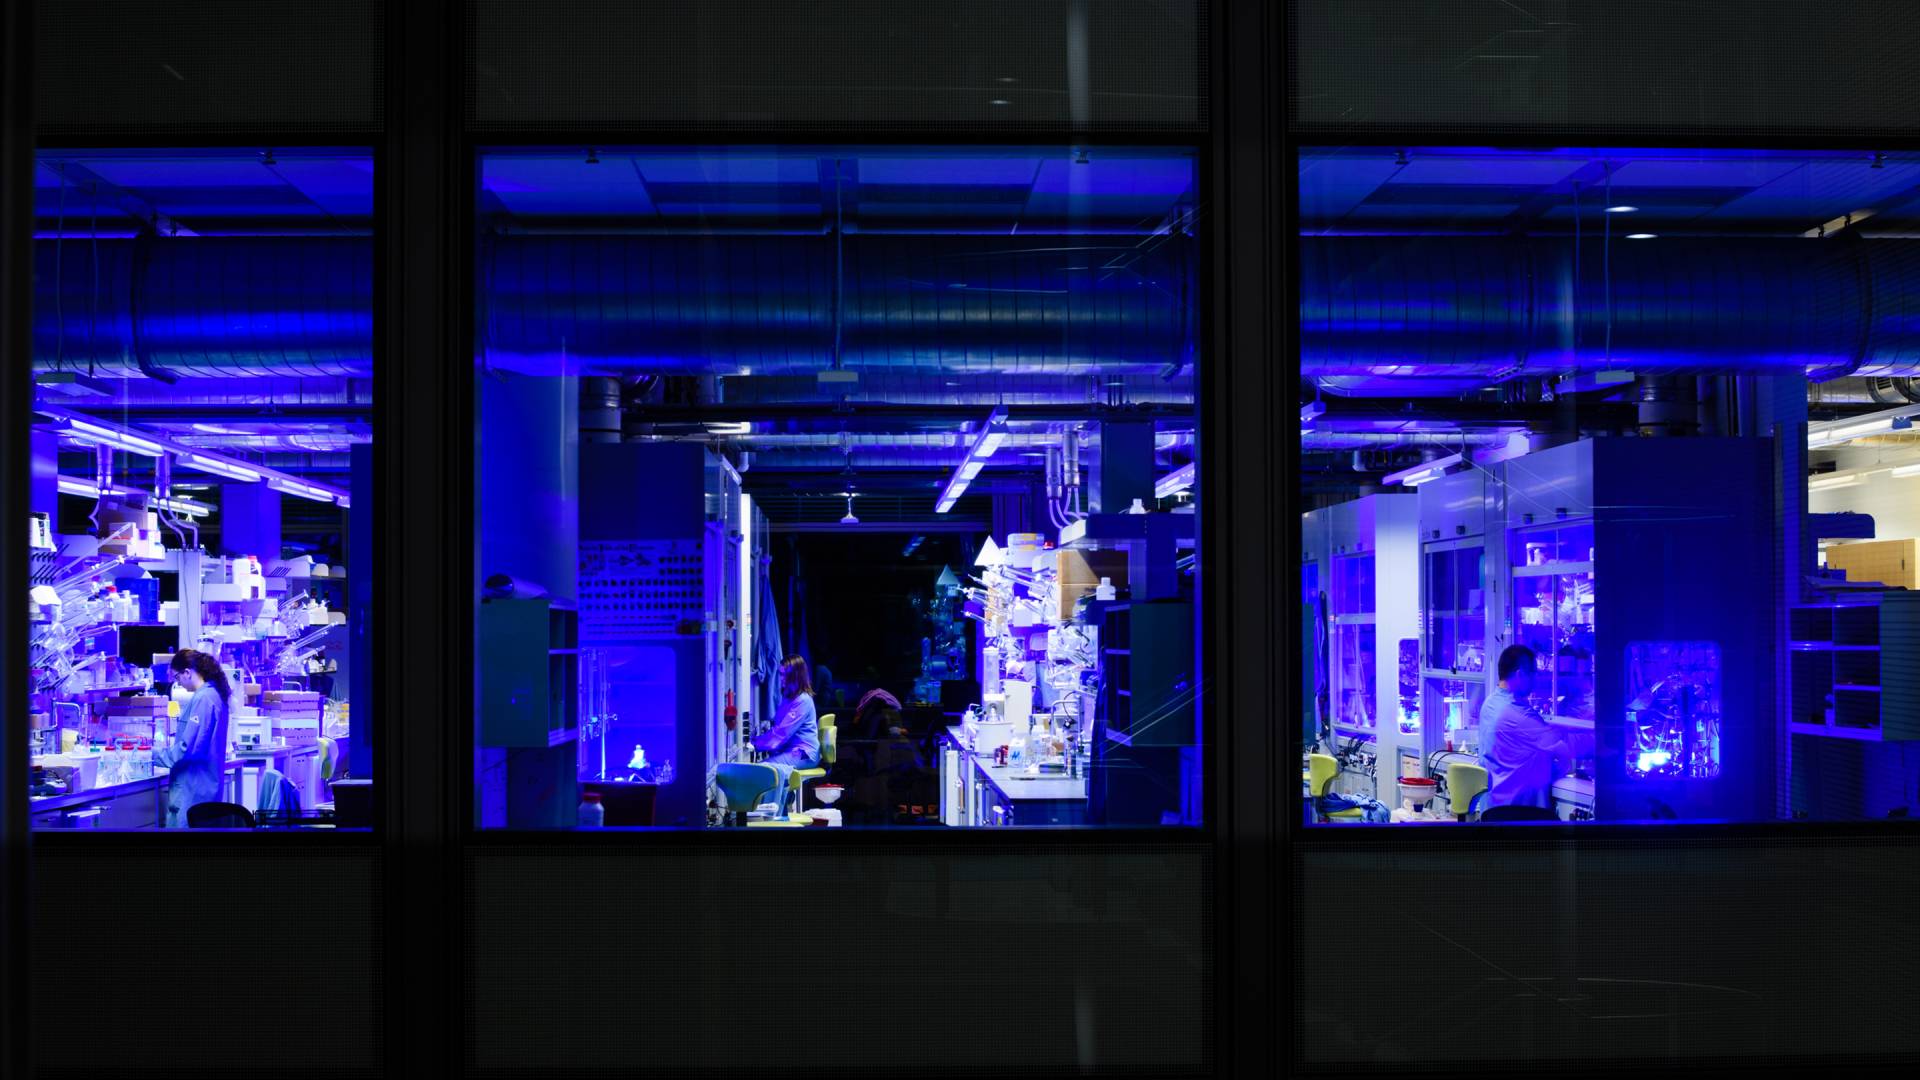 Lab with blue lighting